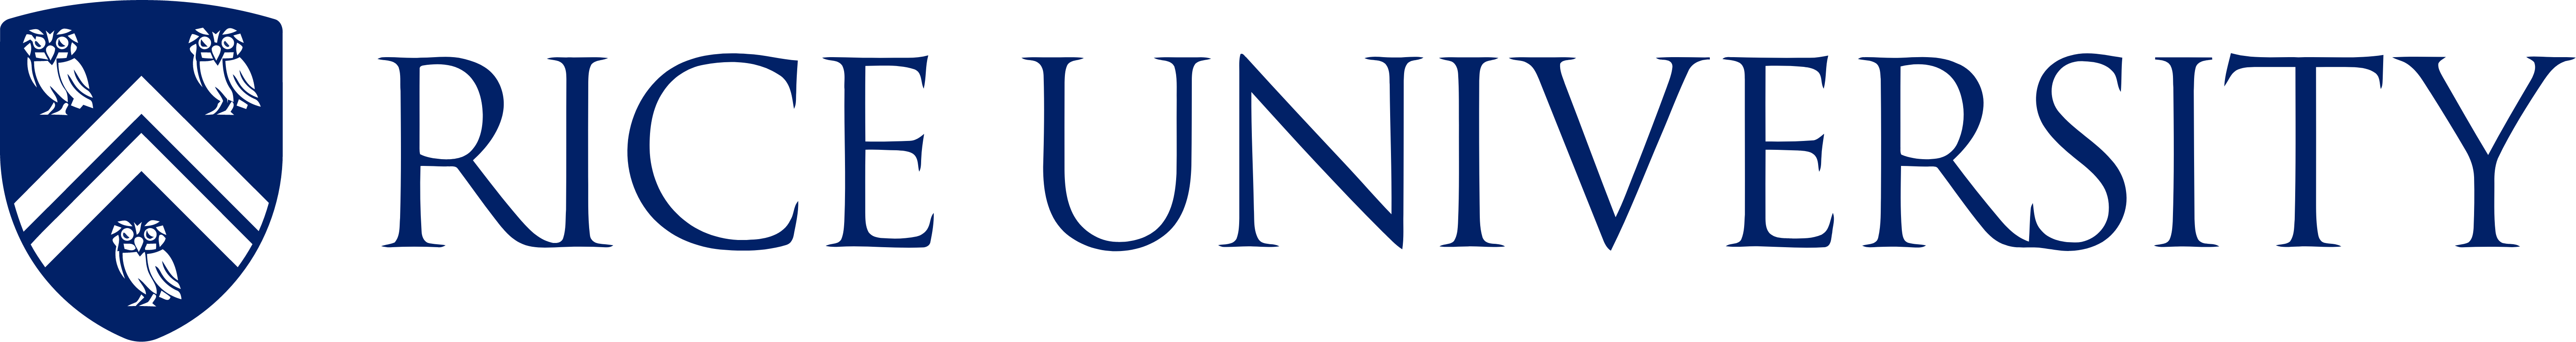 Rice-University-Logos